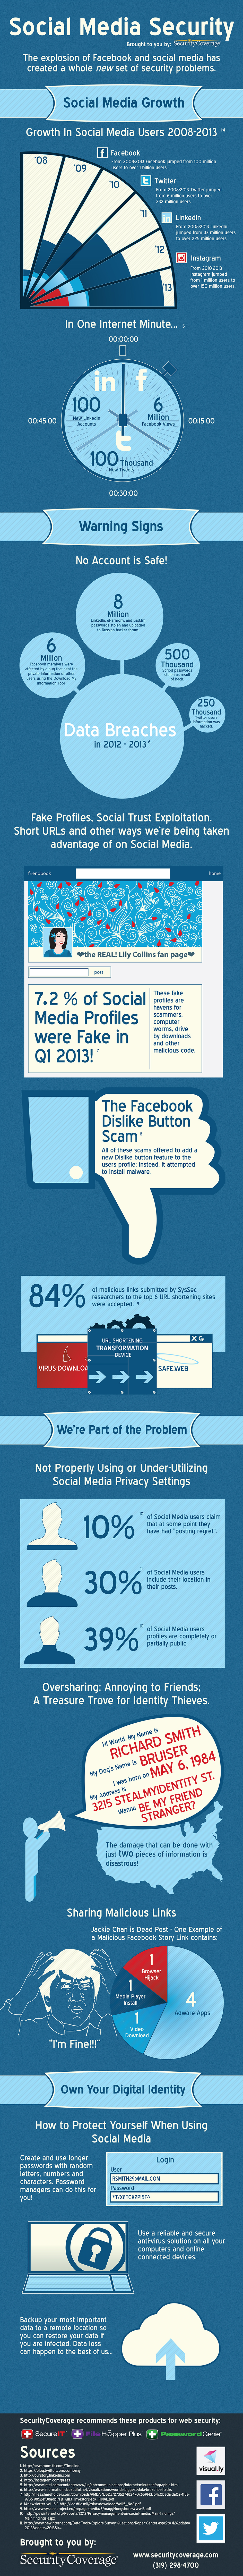 SocialMediaSecurity_infographic